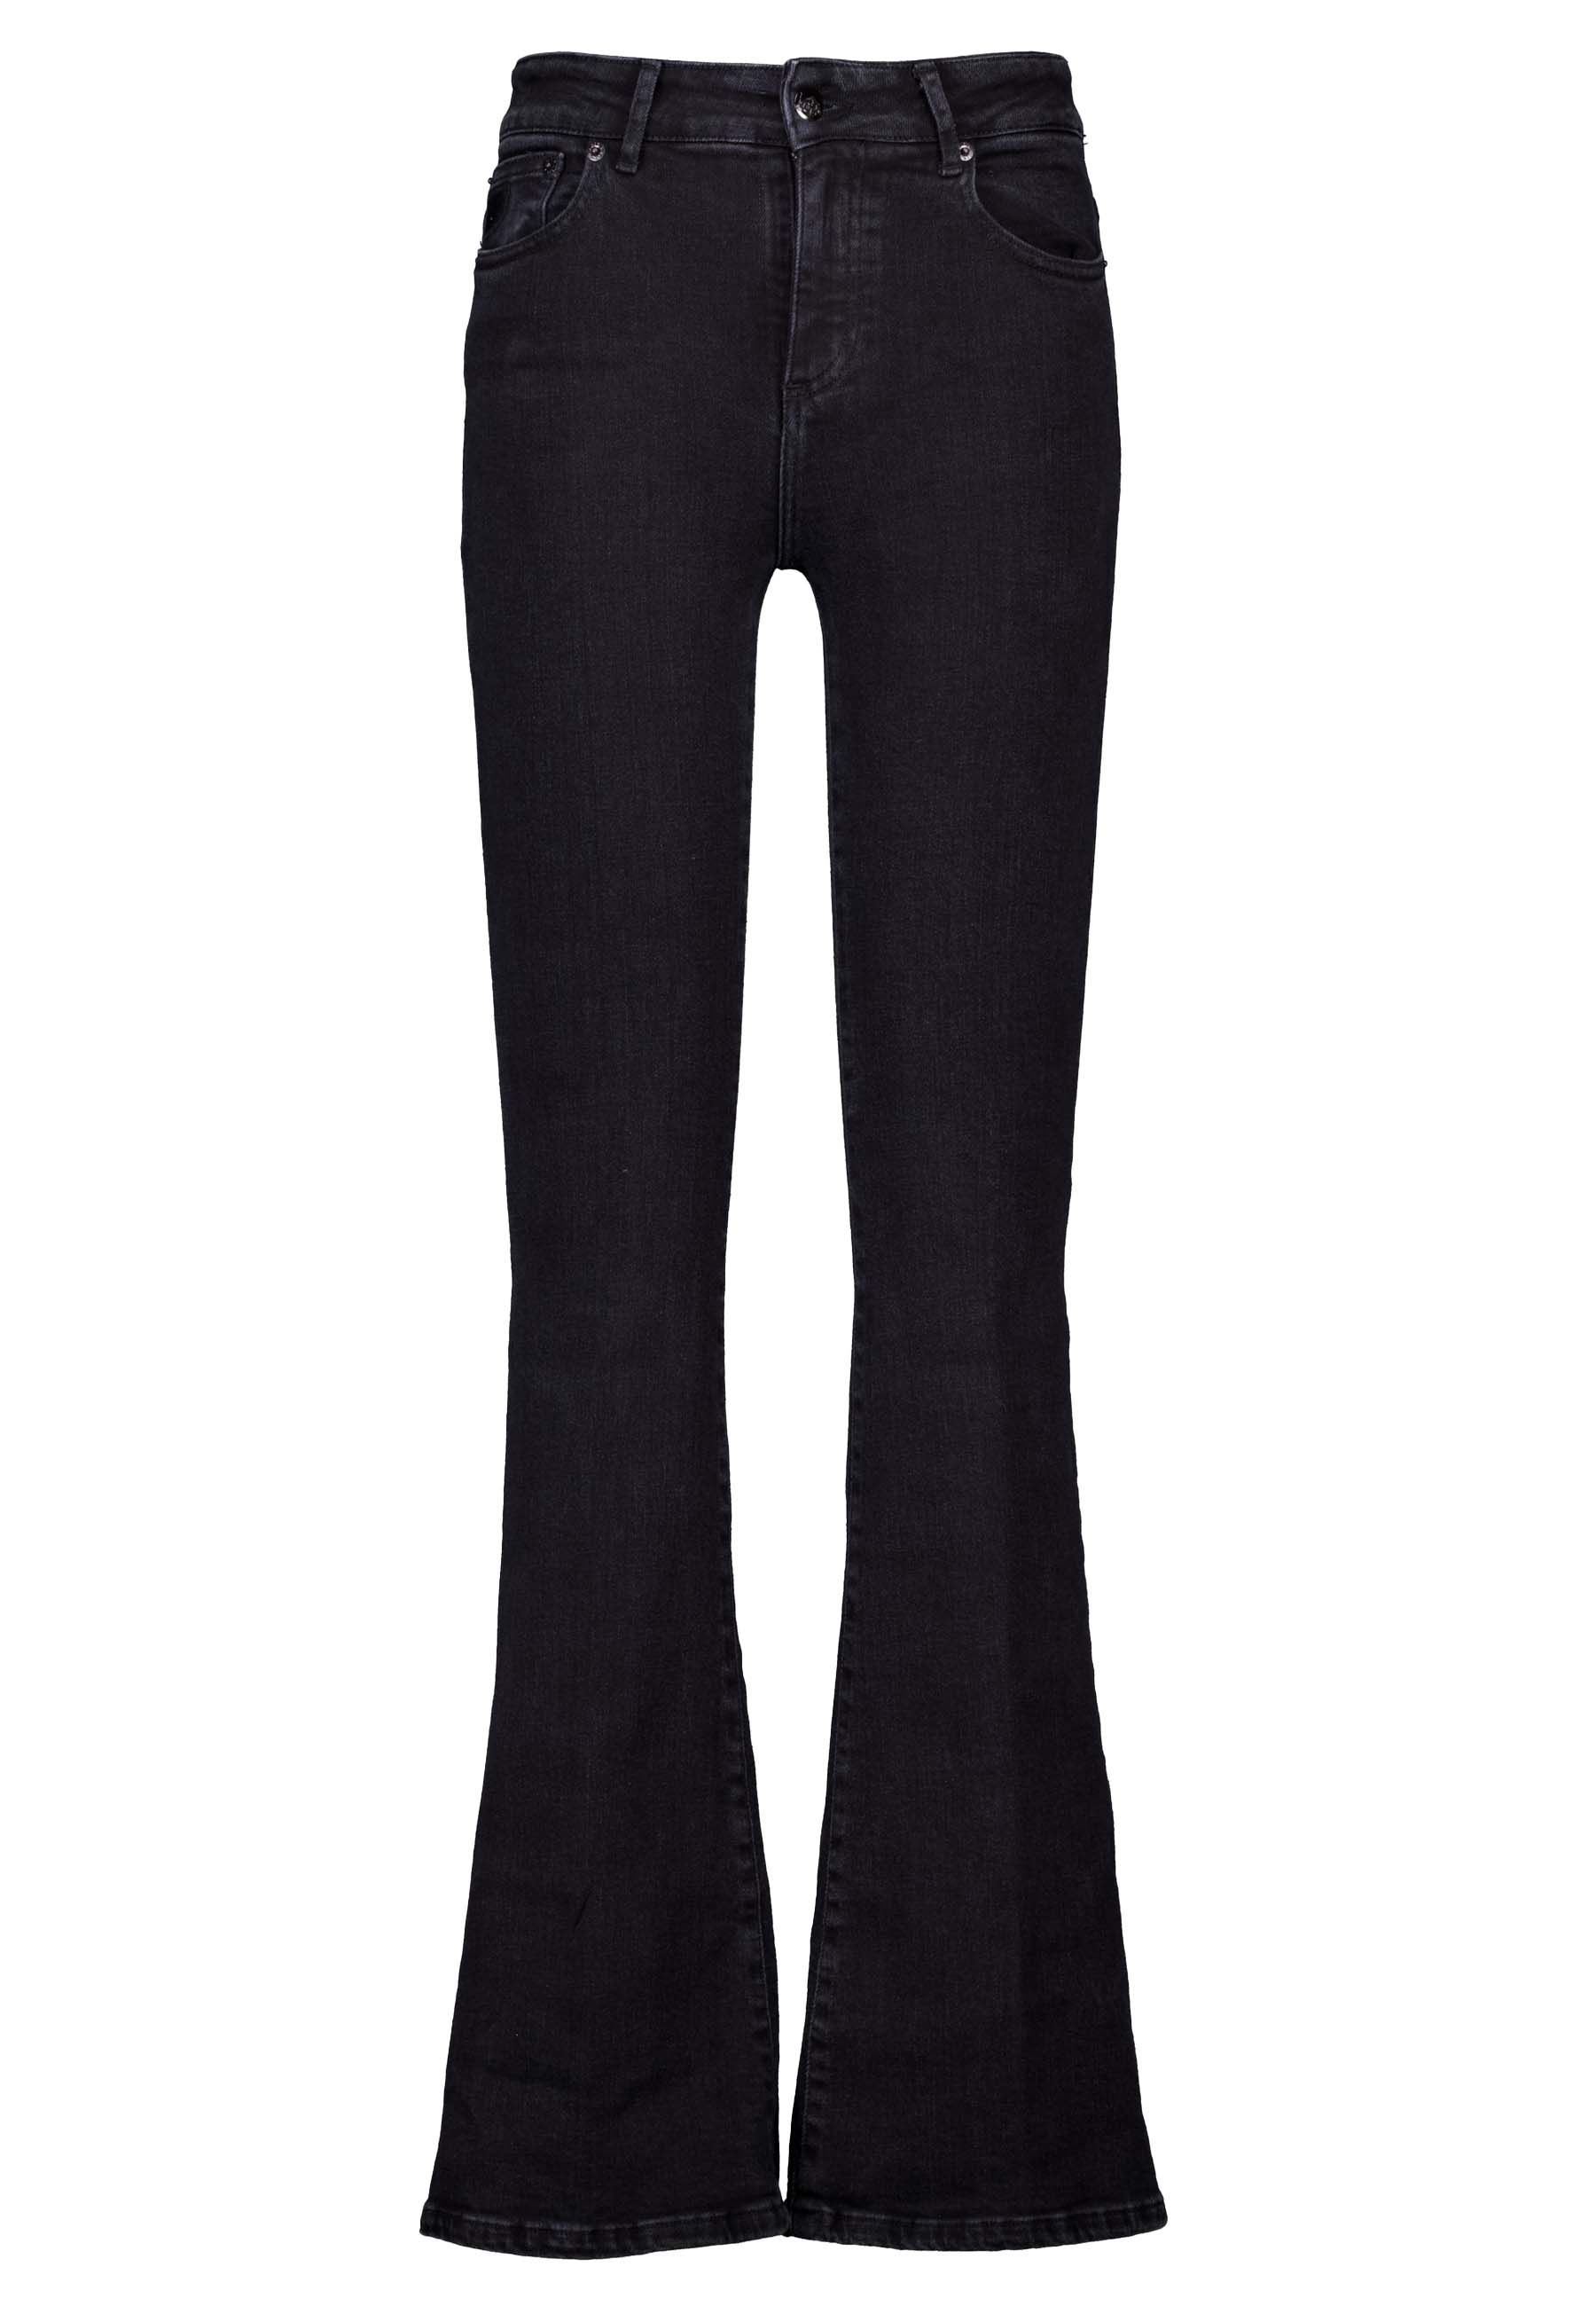 Lois Raval 16 caspar jeans zwart Dames maat 31/32